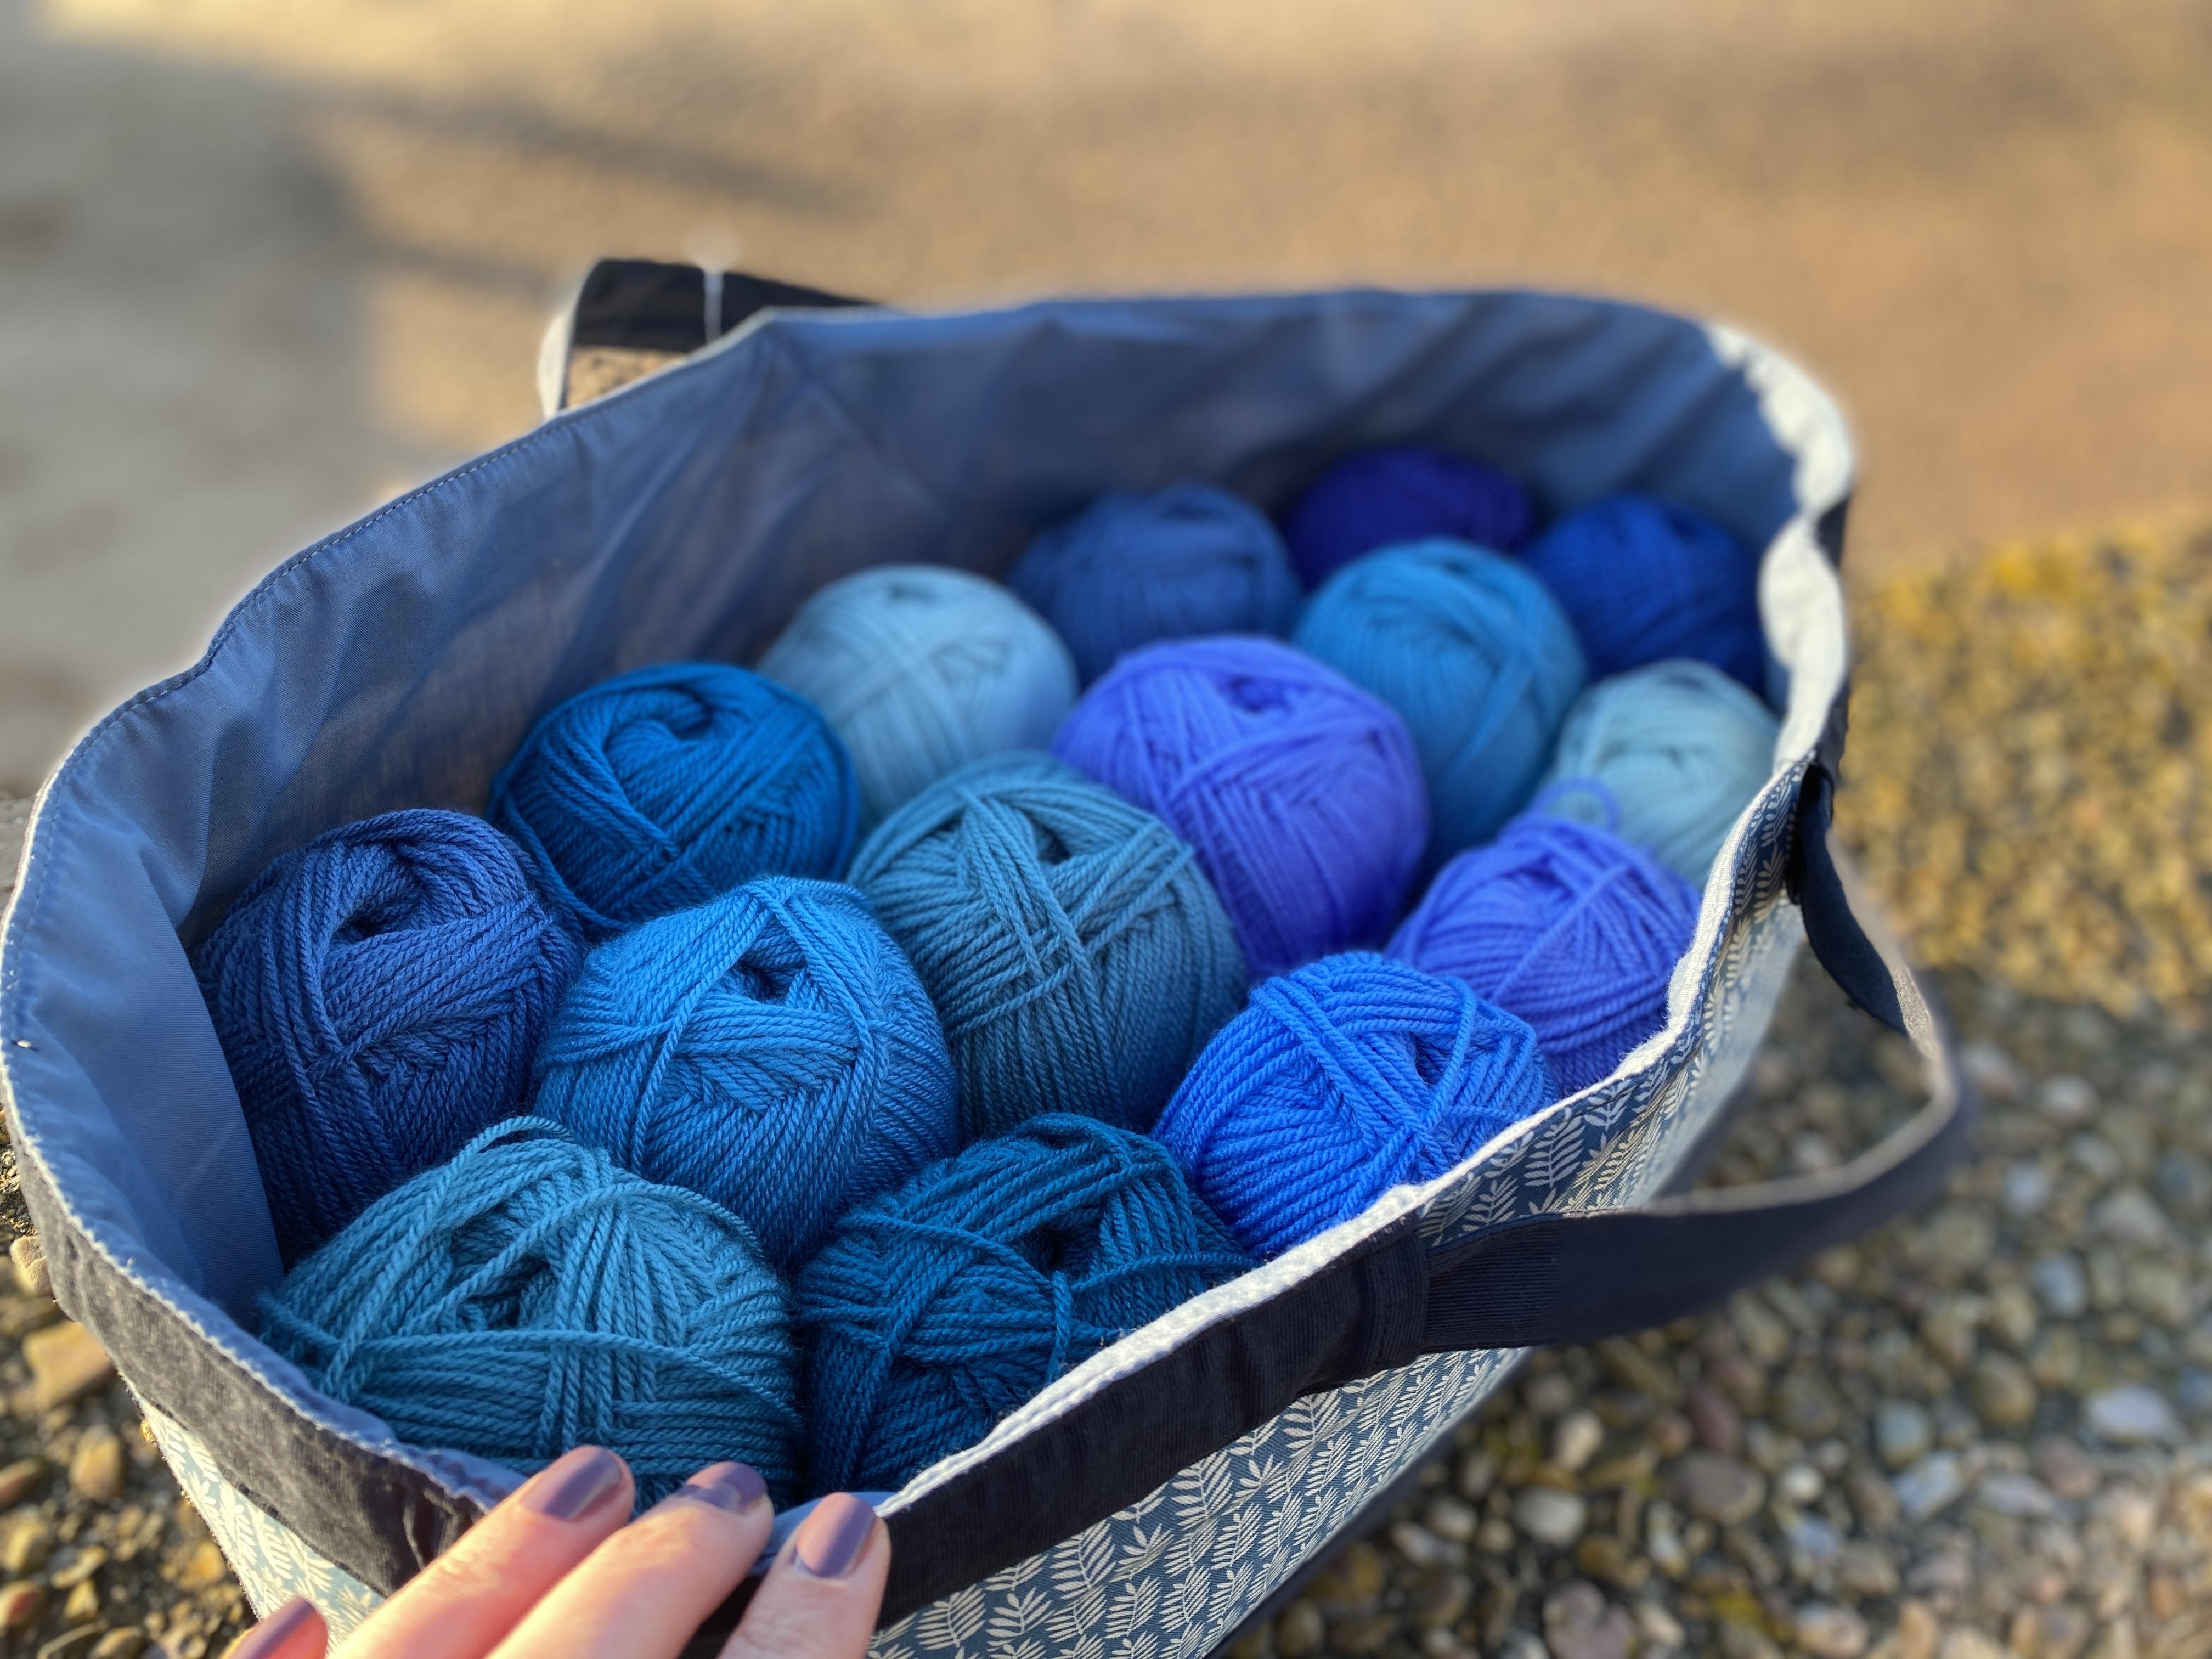 blue fern craft bag filled with 15 balls of yarn